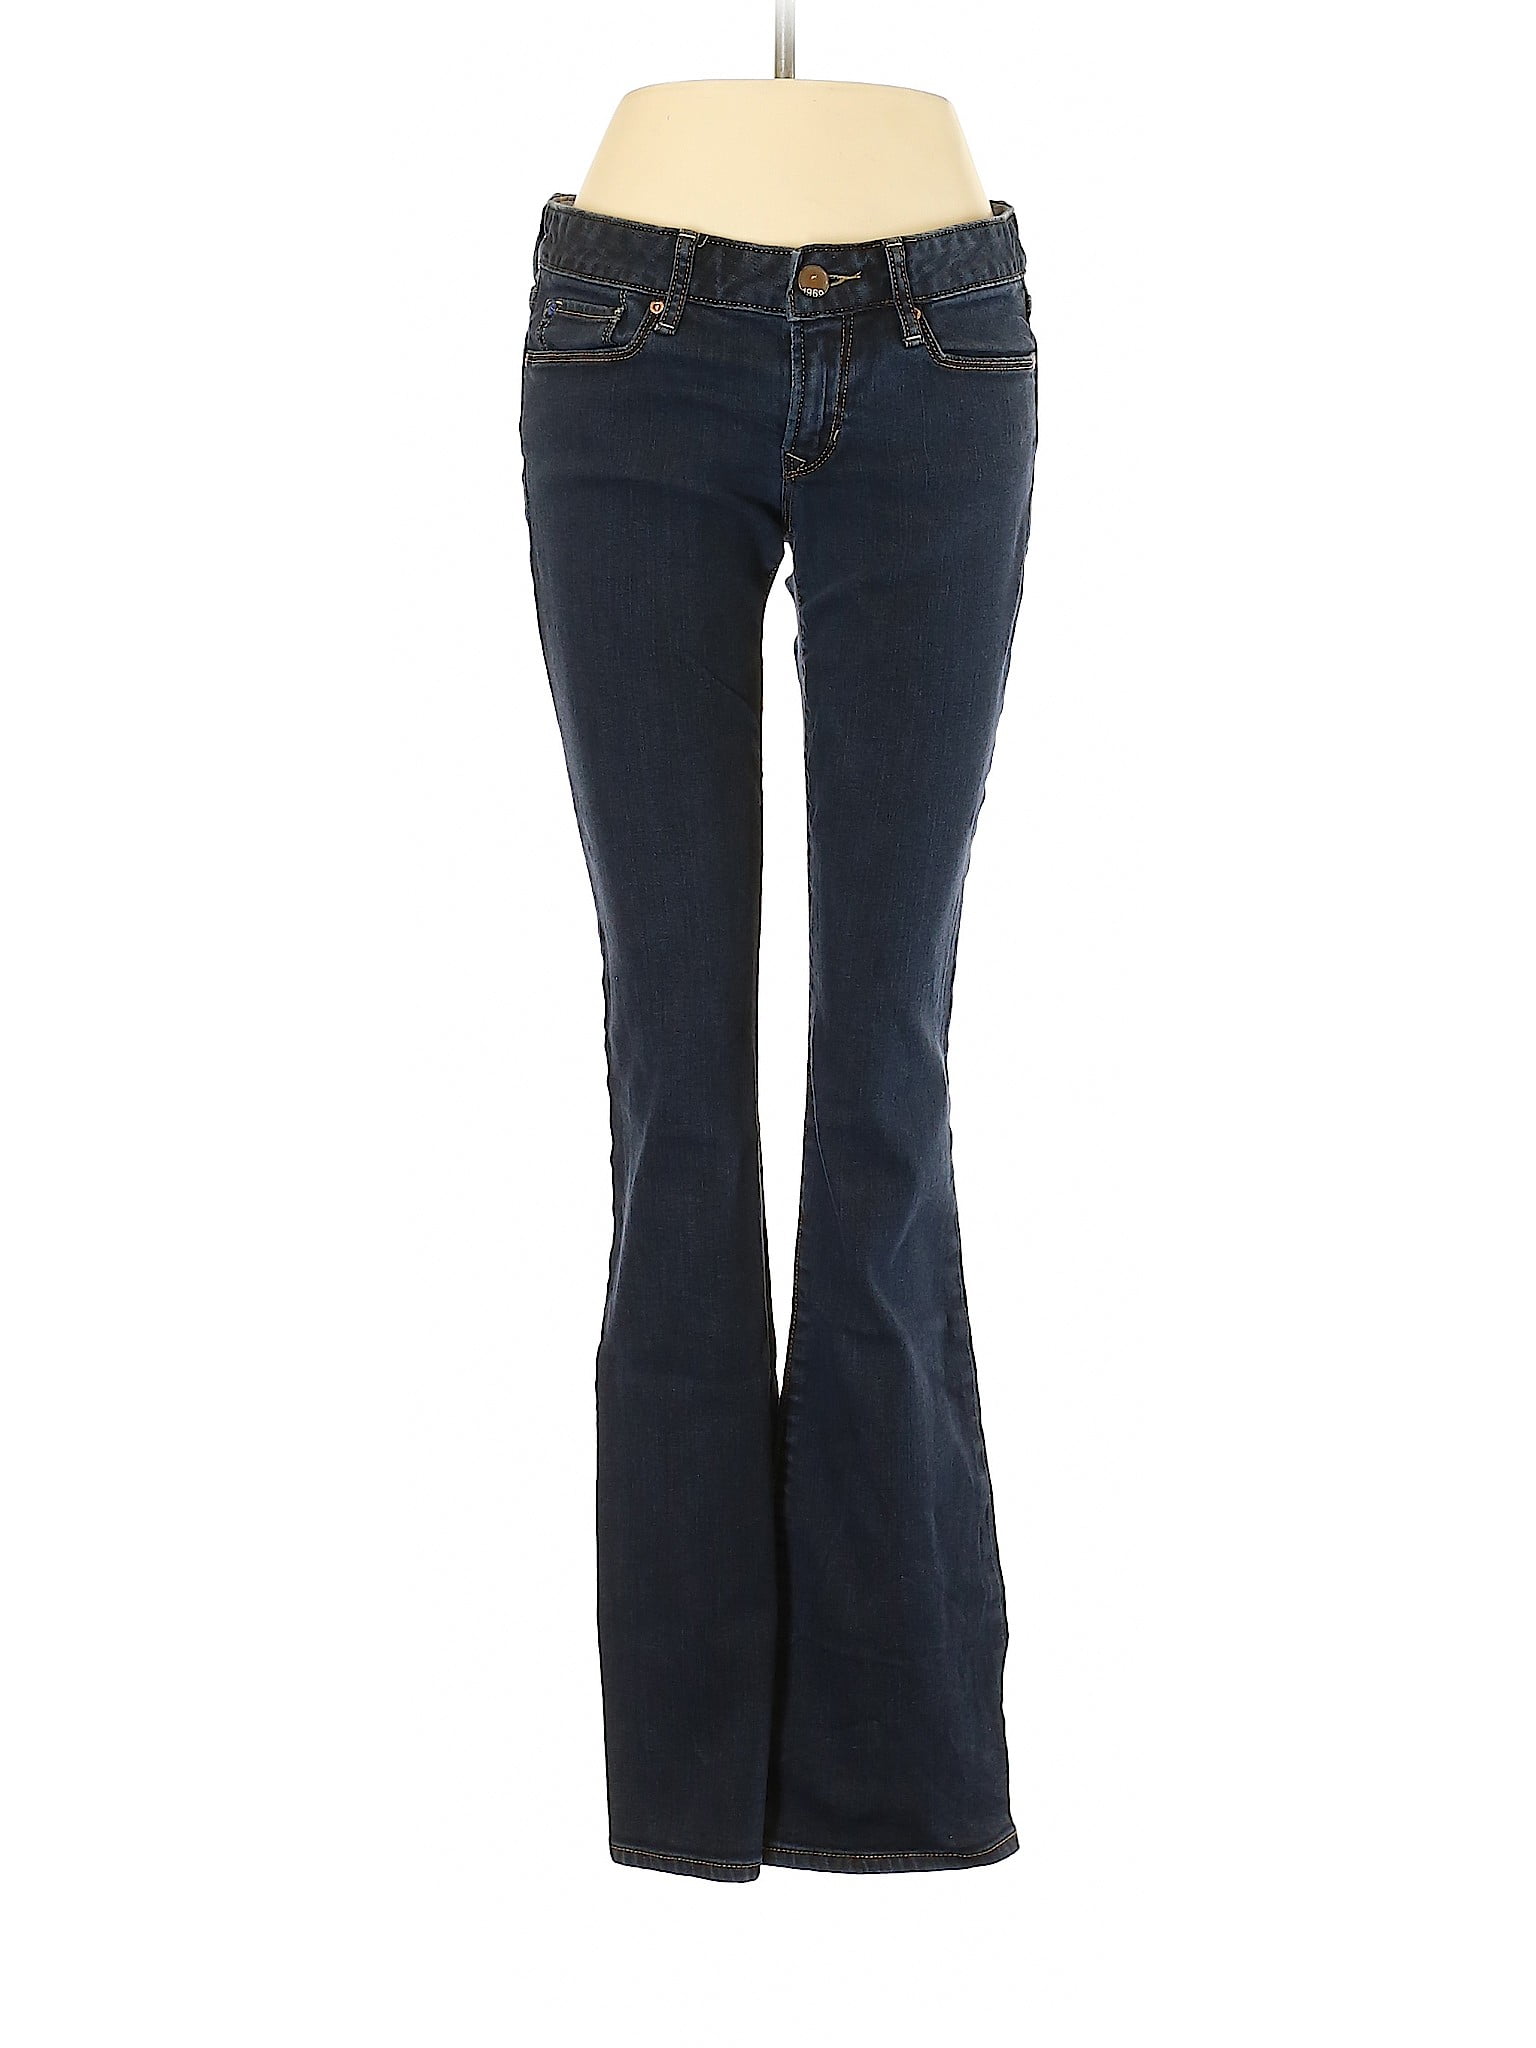 Gap - Pre-Owned Gap Women's Size 28W Jeans - Walmart.com - Walmart.com